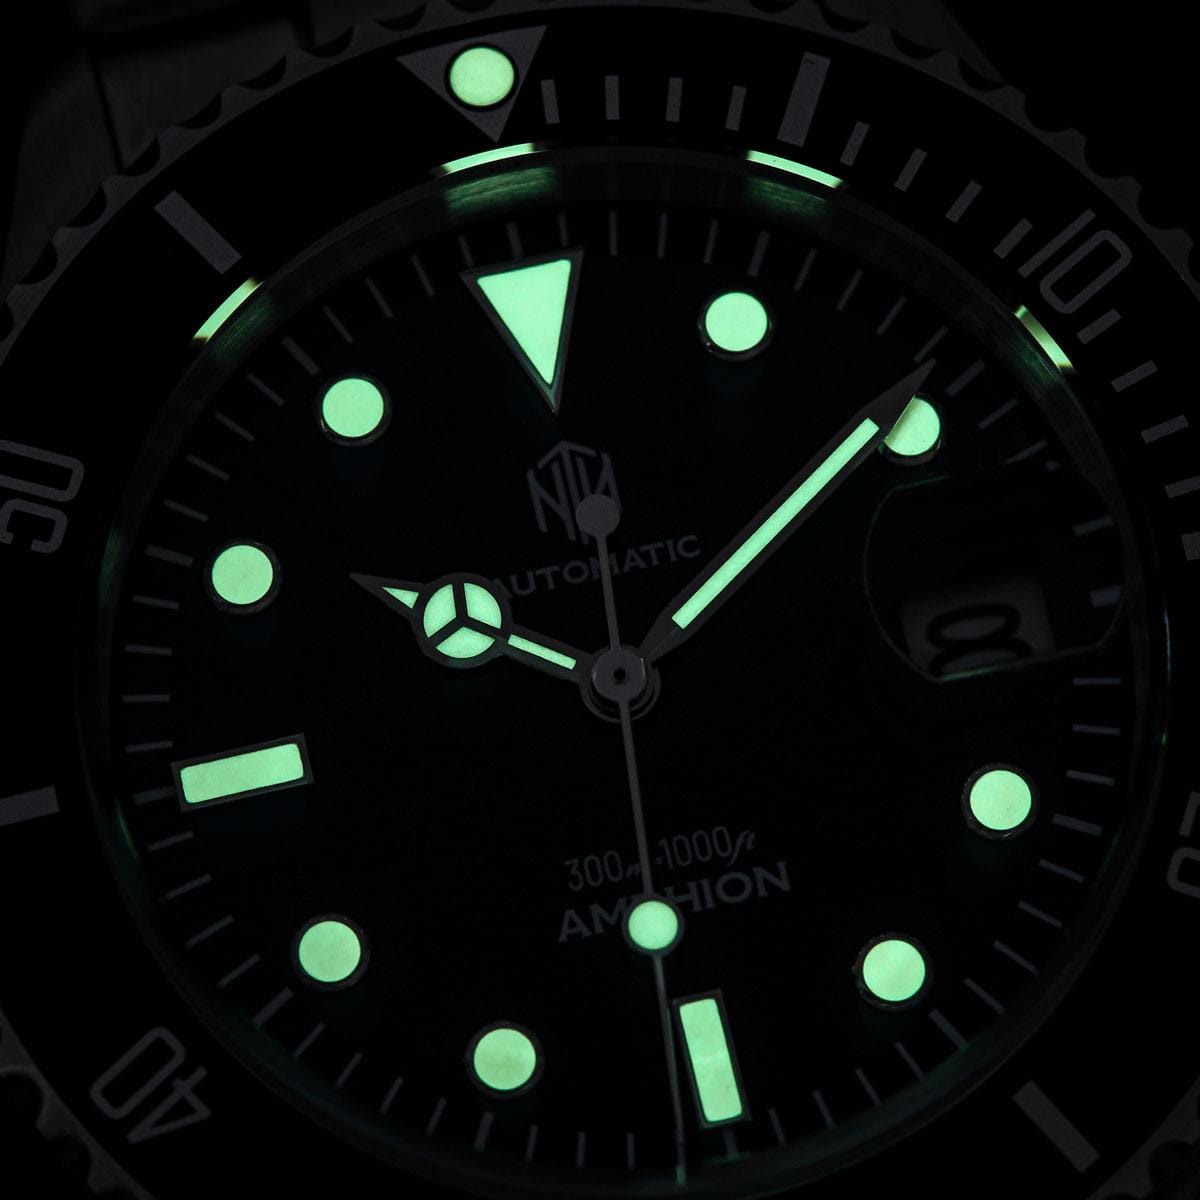 NTH Amphion Dive Watch - Onyx Black - WatchGecko Exclusive